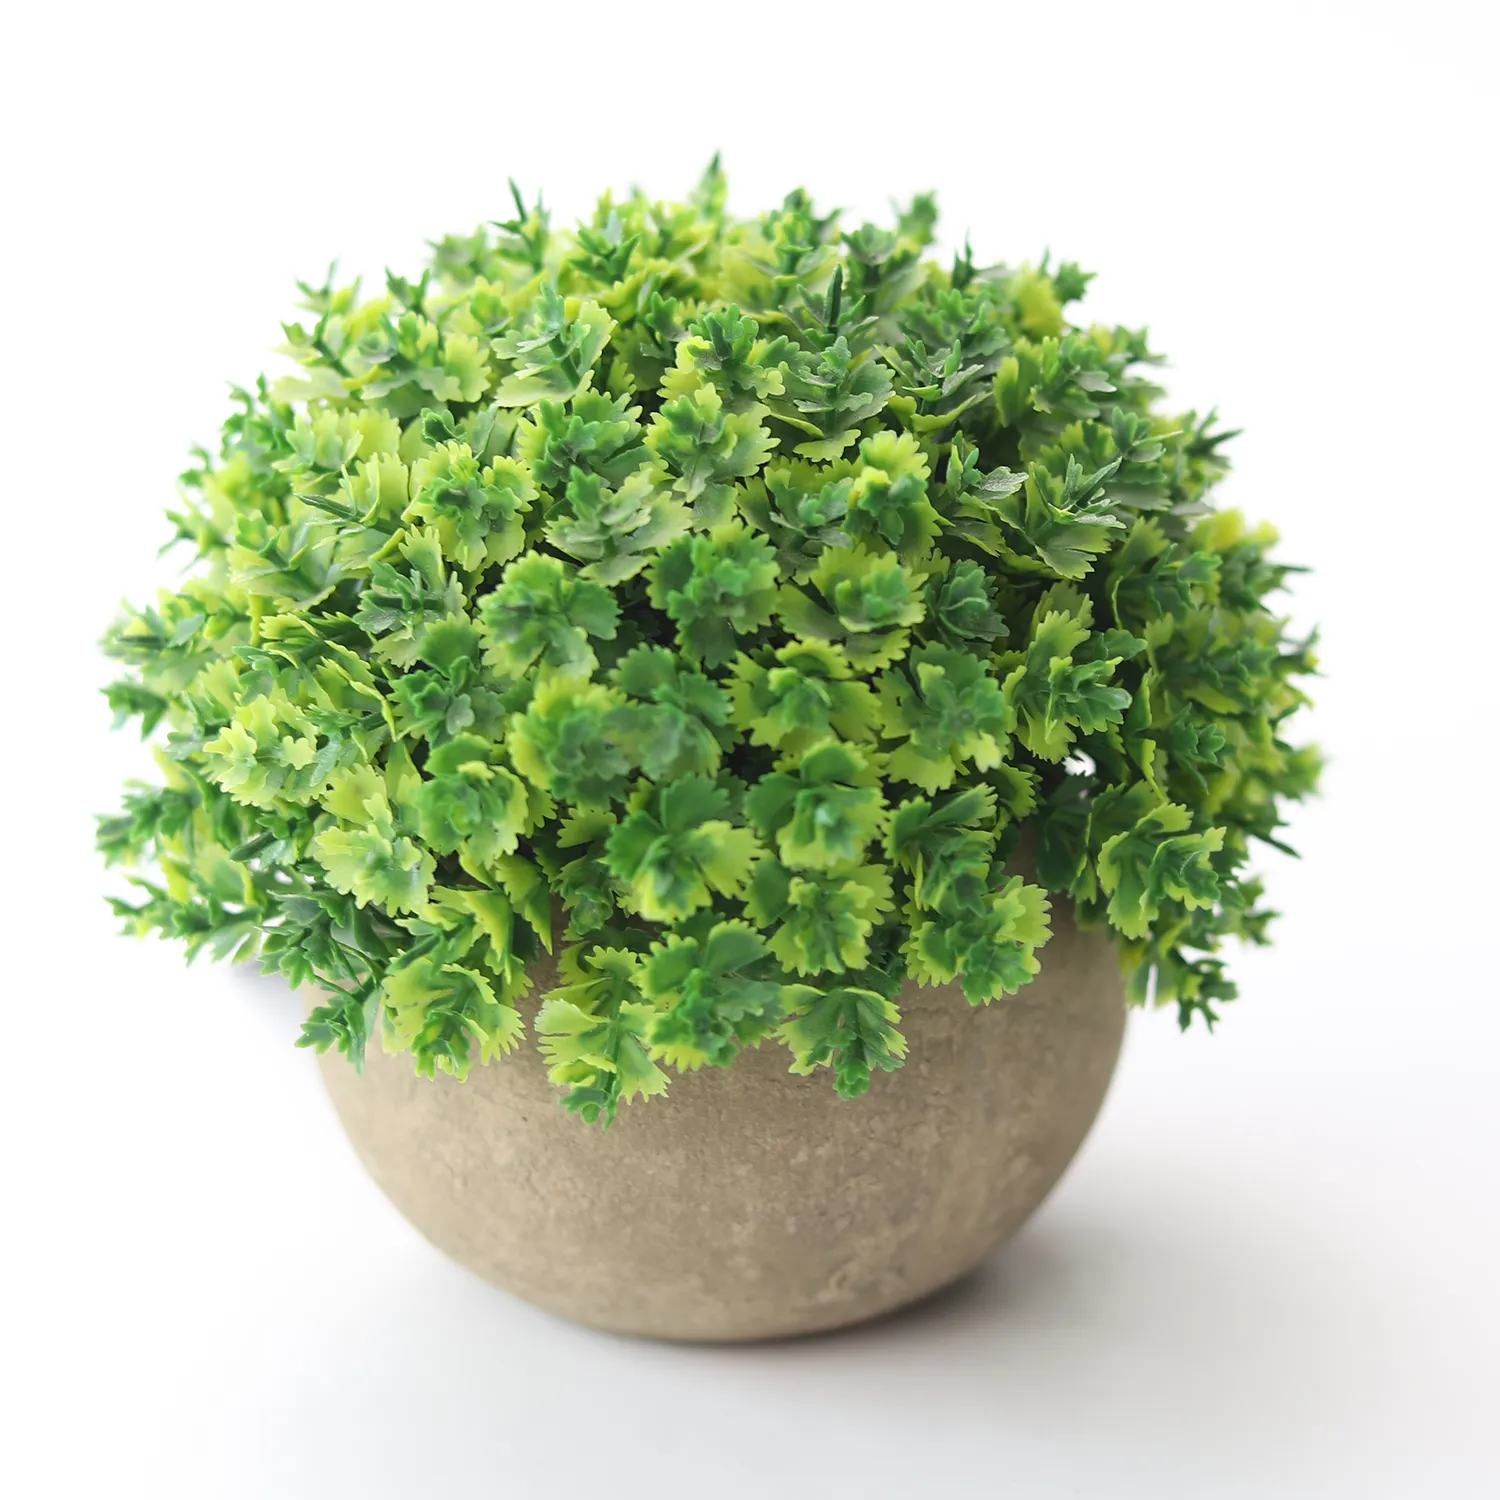 Hign quality Mini Artificial Eucalyptus Plants Potted Simulated green plants in pots plastic mini bonsai greenery office decor